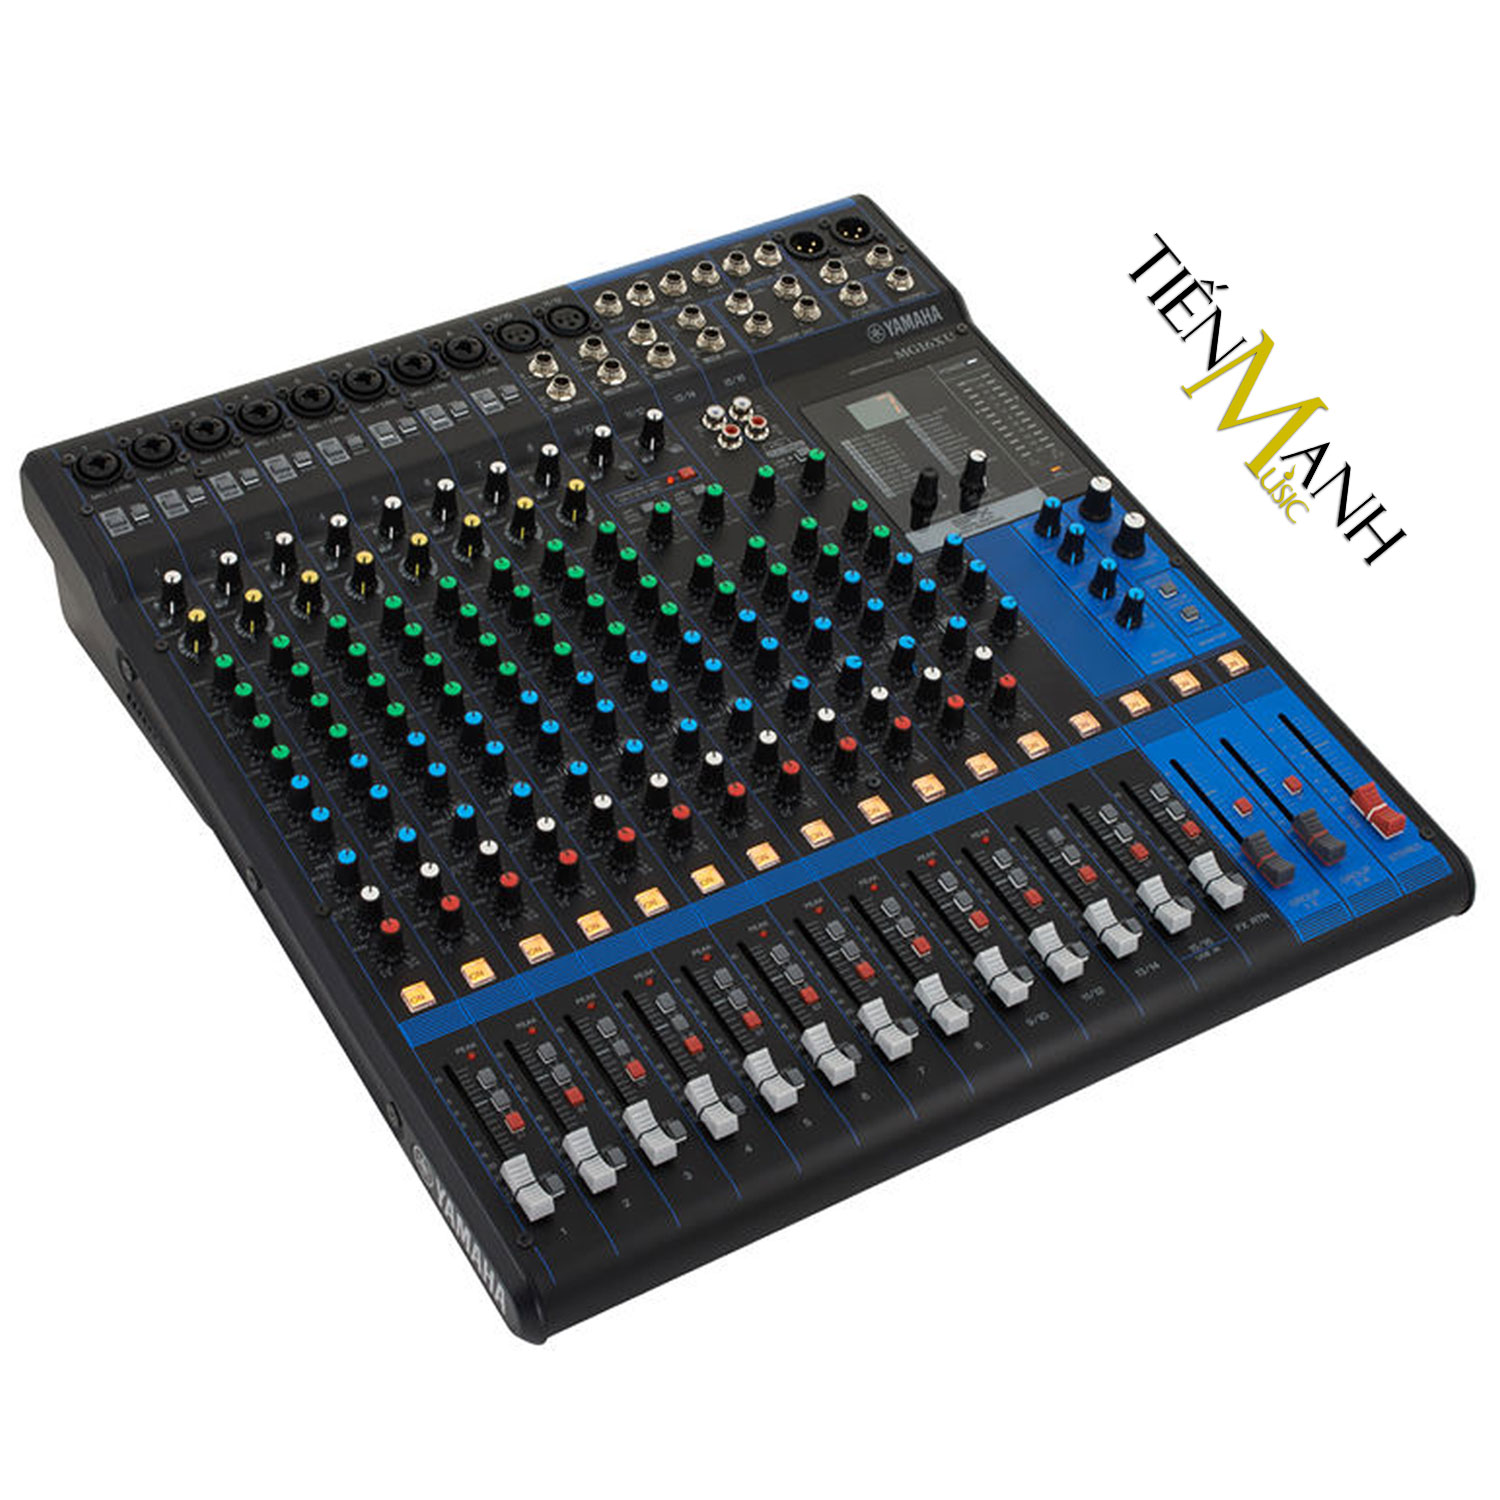 Cach-su-dung-Yamaha-MG16XU-Soundcard-kiem-Ban-Tron-Mixer-Interface.jpg